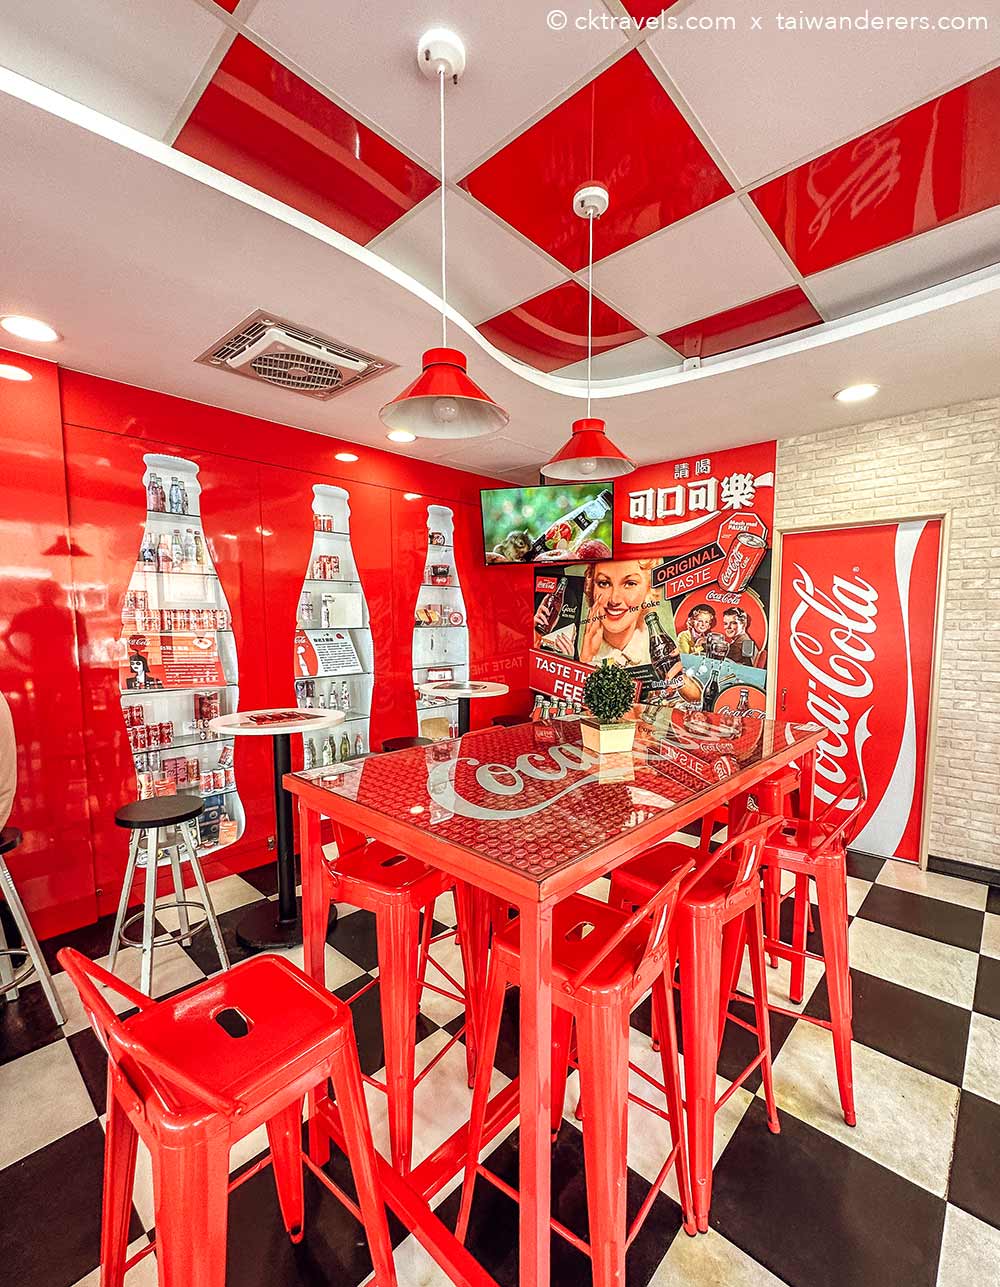 Coca Cola themed 7-eleven convenience store in Taipei Taiwan